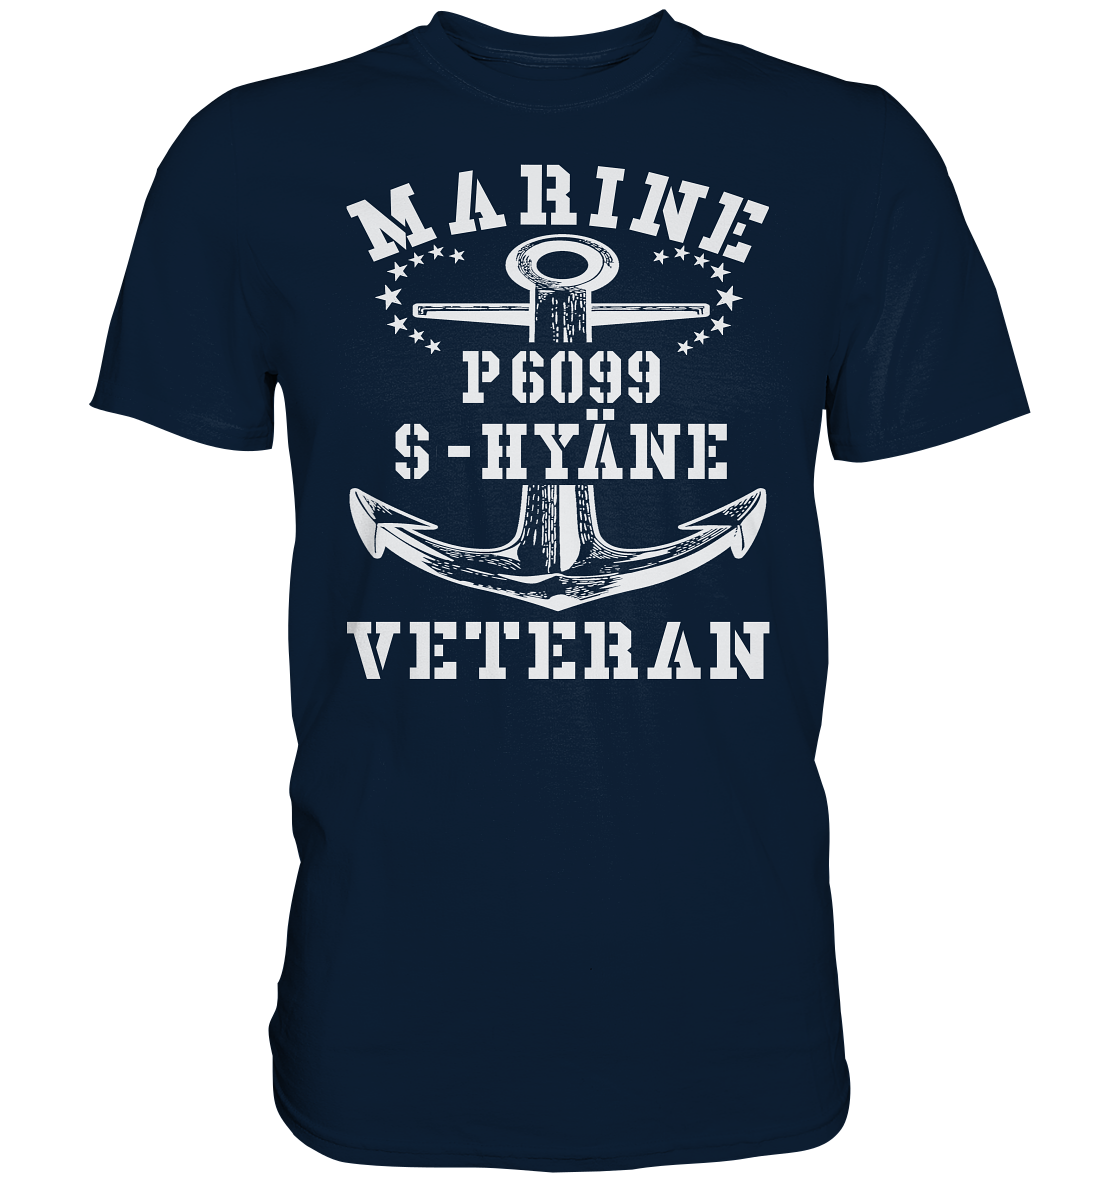 P6099 S-HYÄNE Marine Veteran - Premium Shirt